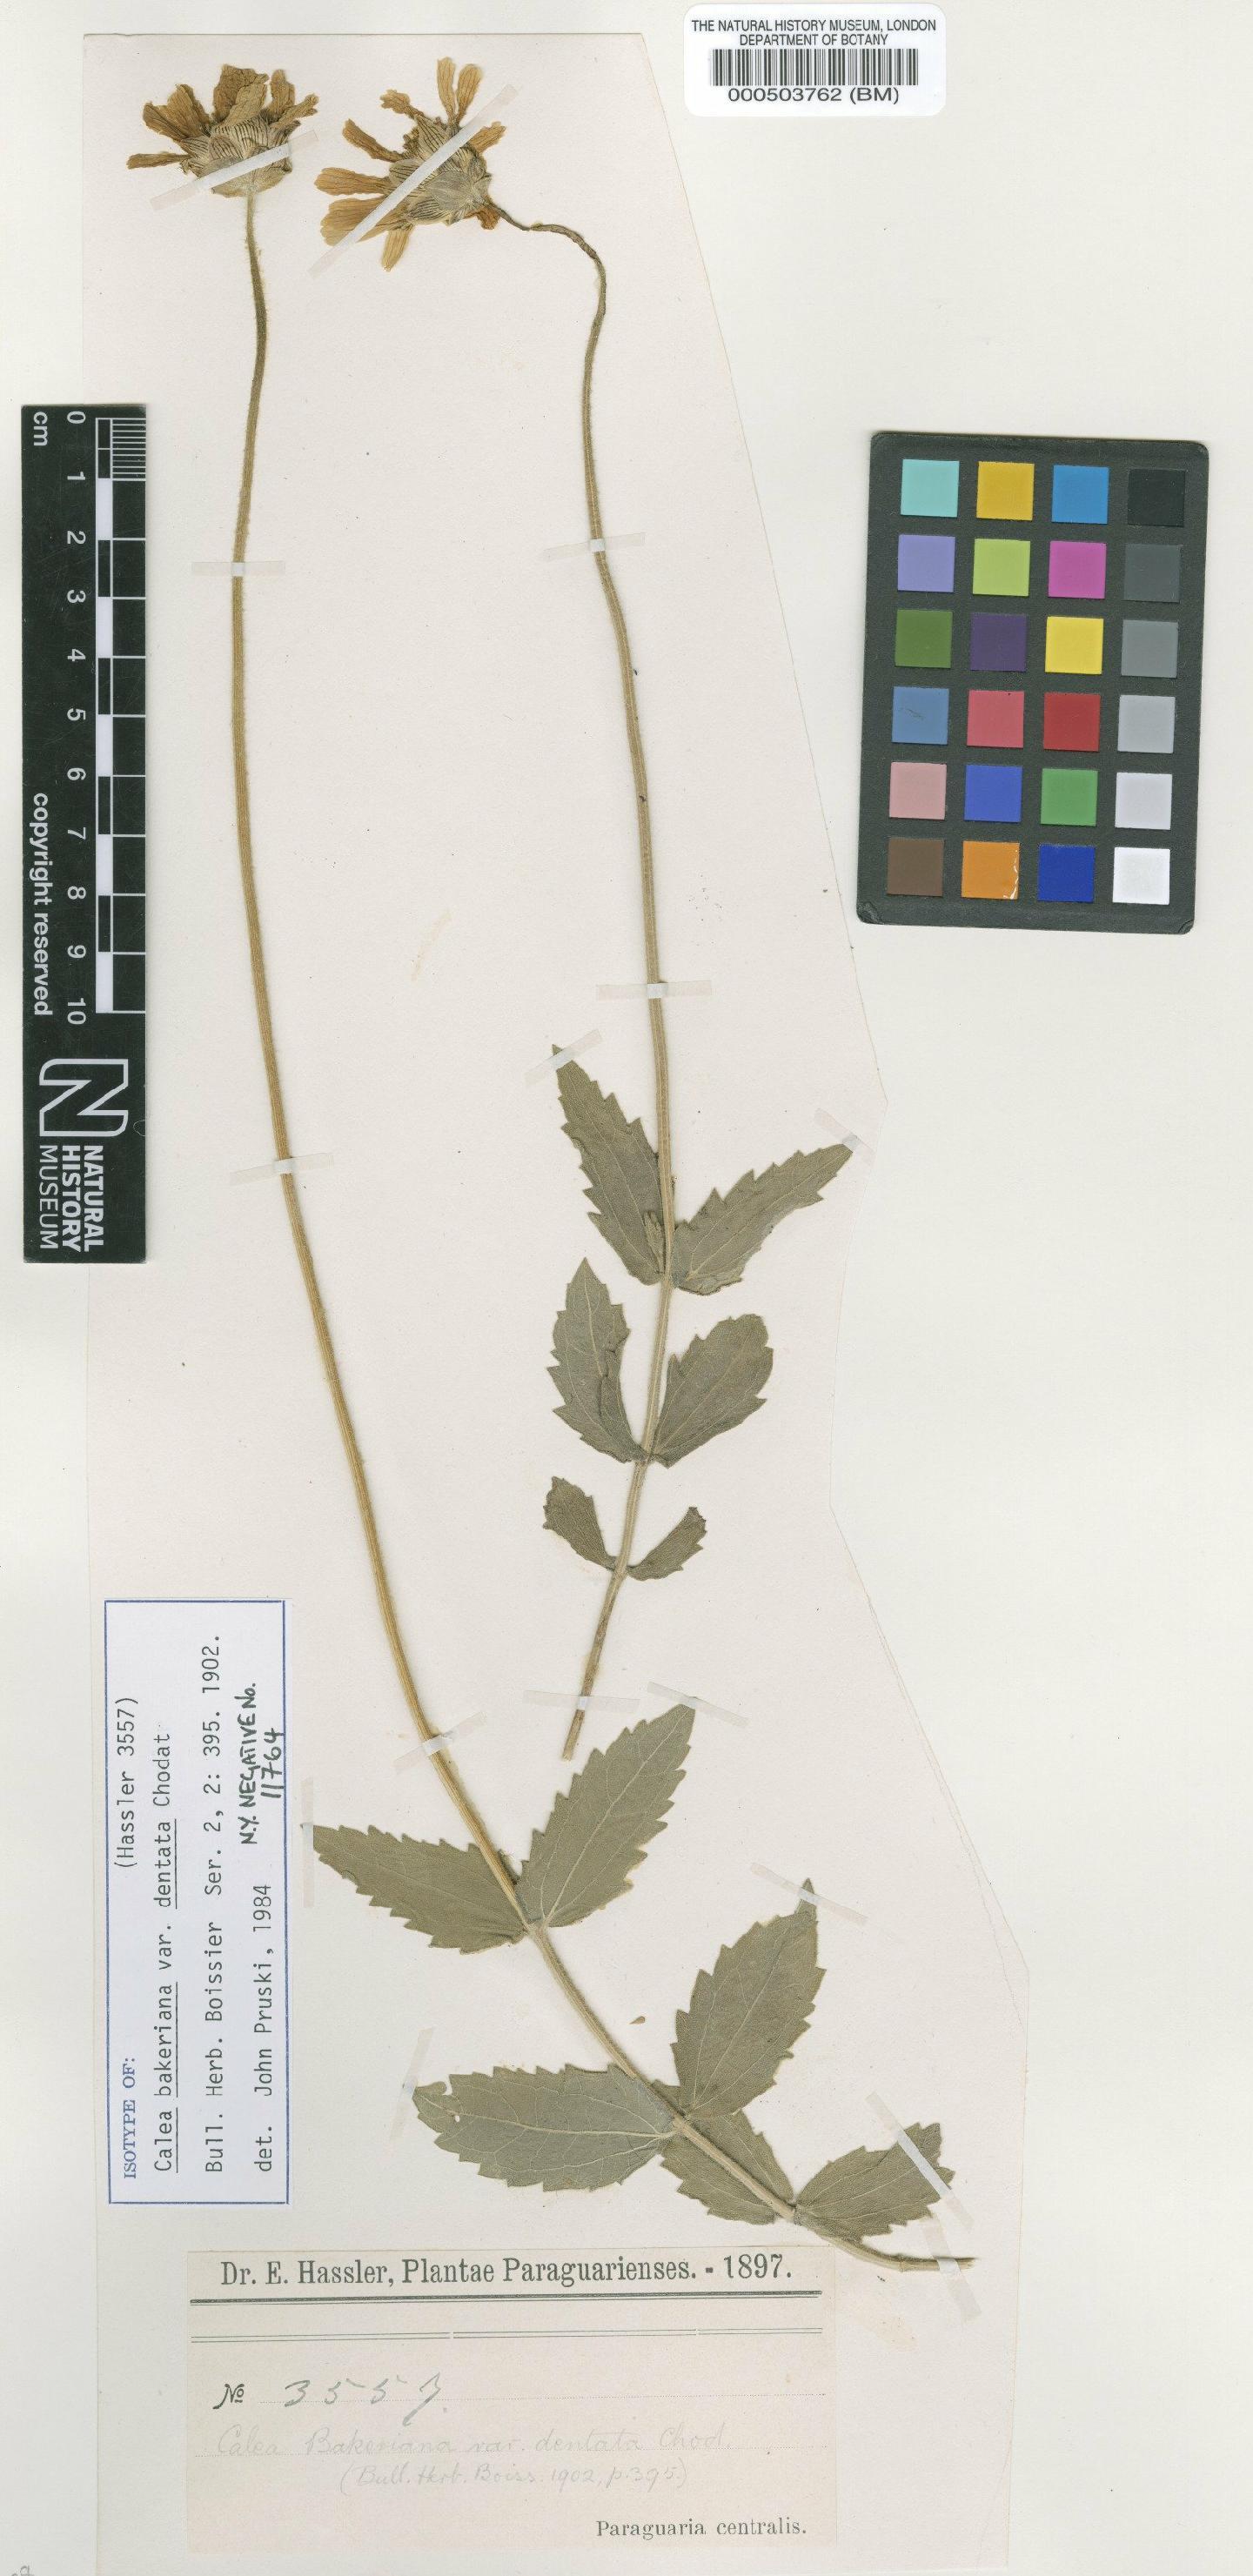 To NHMUK collection (Calea bakeriana var. dentata Chodat; Isotype; NHMUK:ecatalogue:4566667)